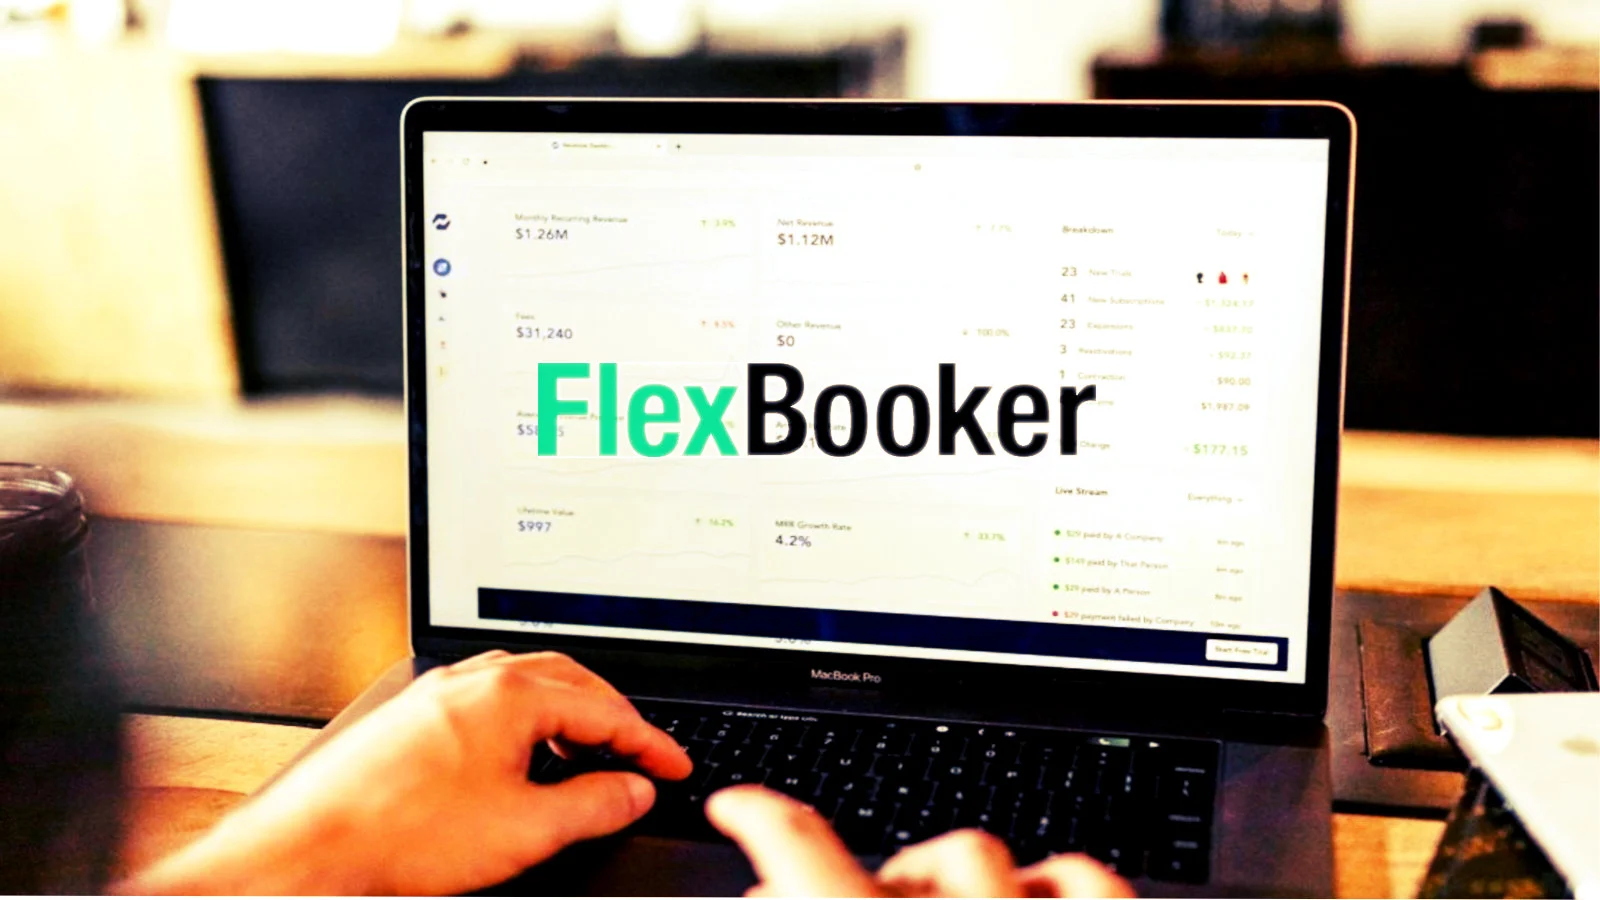 FlexBooker reports a data breach